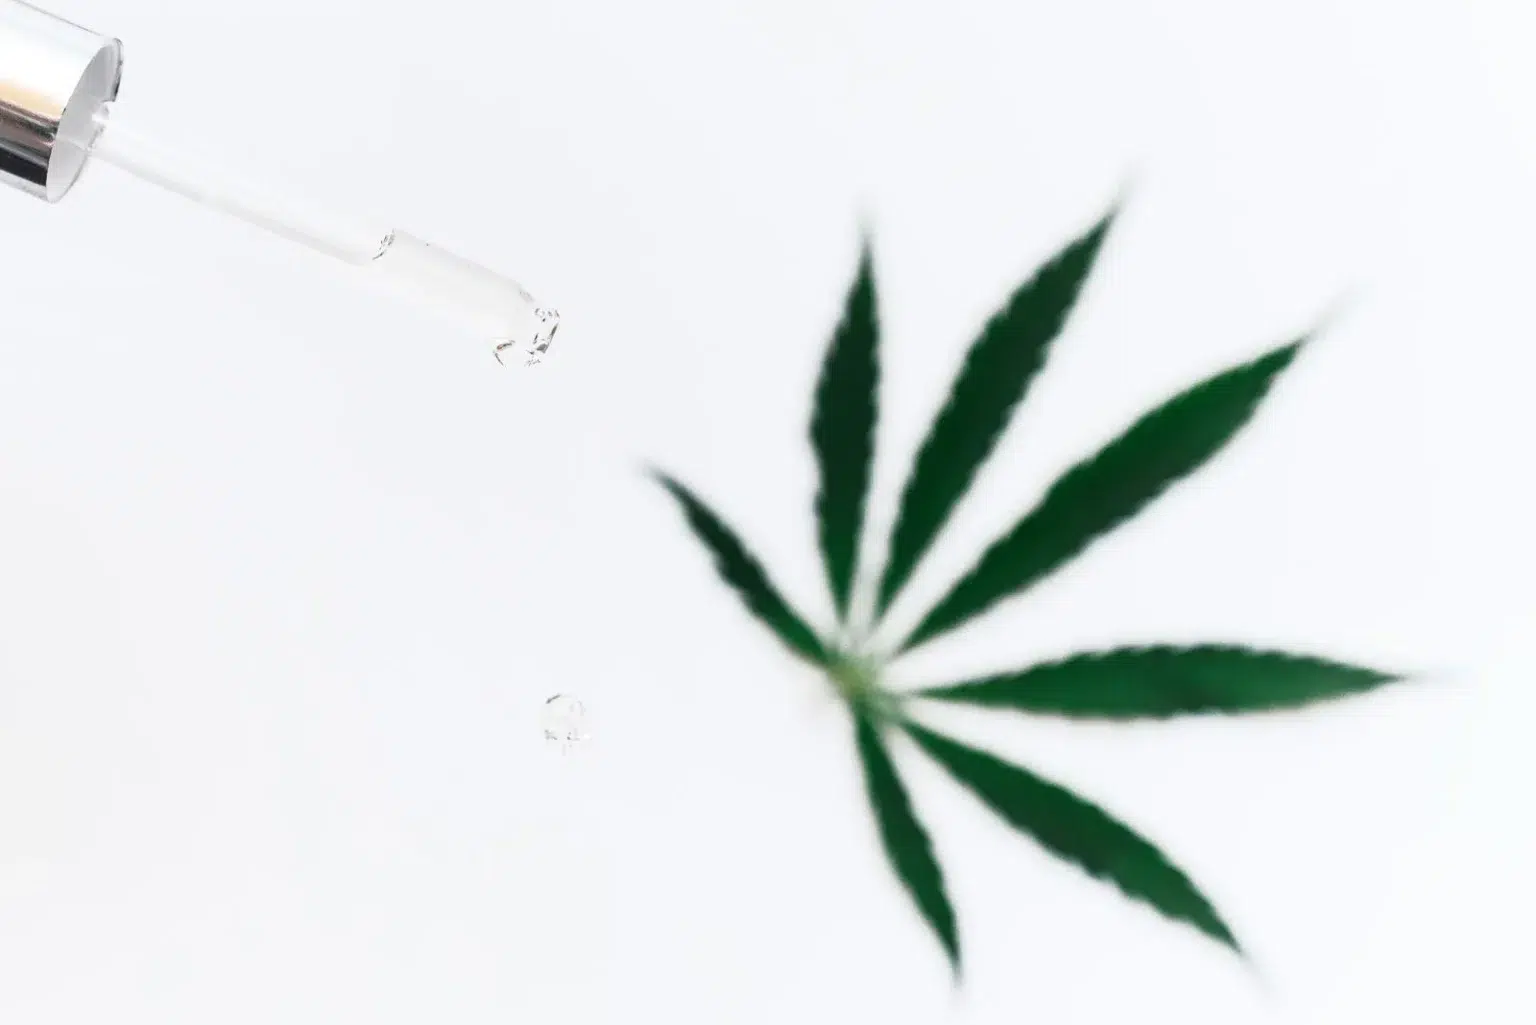 leaf on a white background